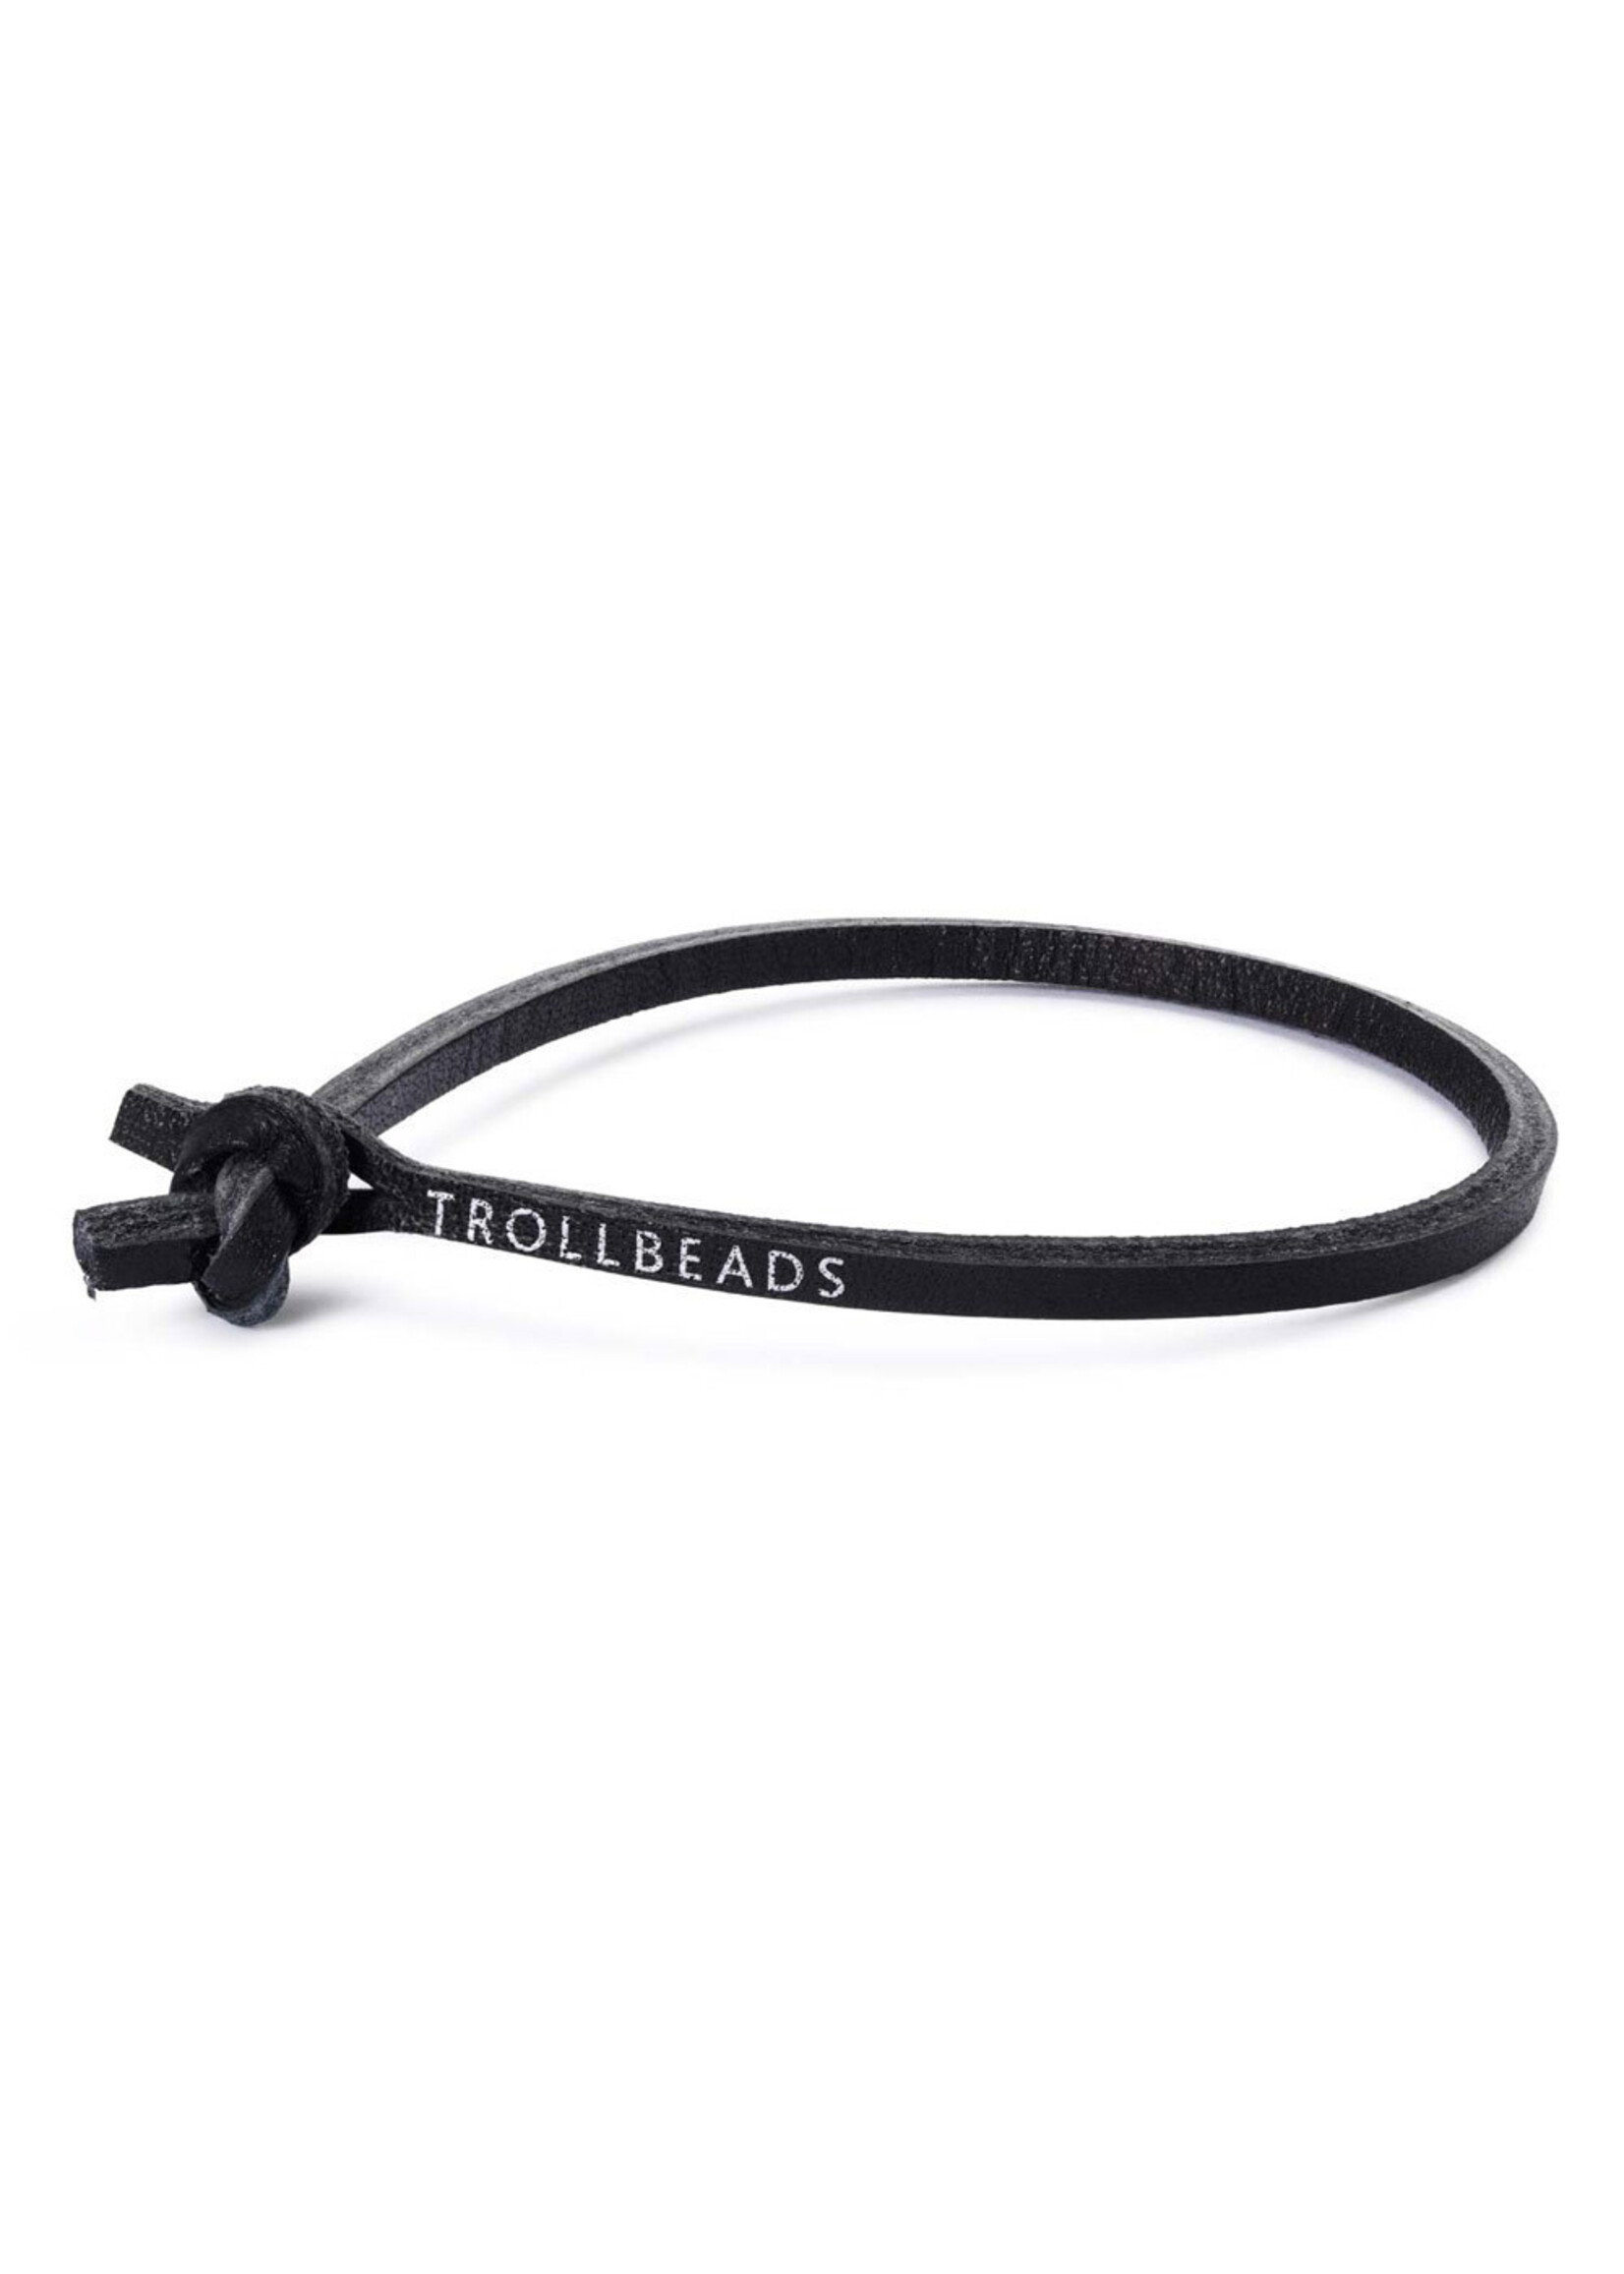 Trollbeads Trollbeads TLEBR-00056 armband zwart leder 28cm